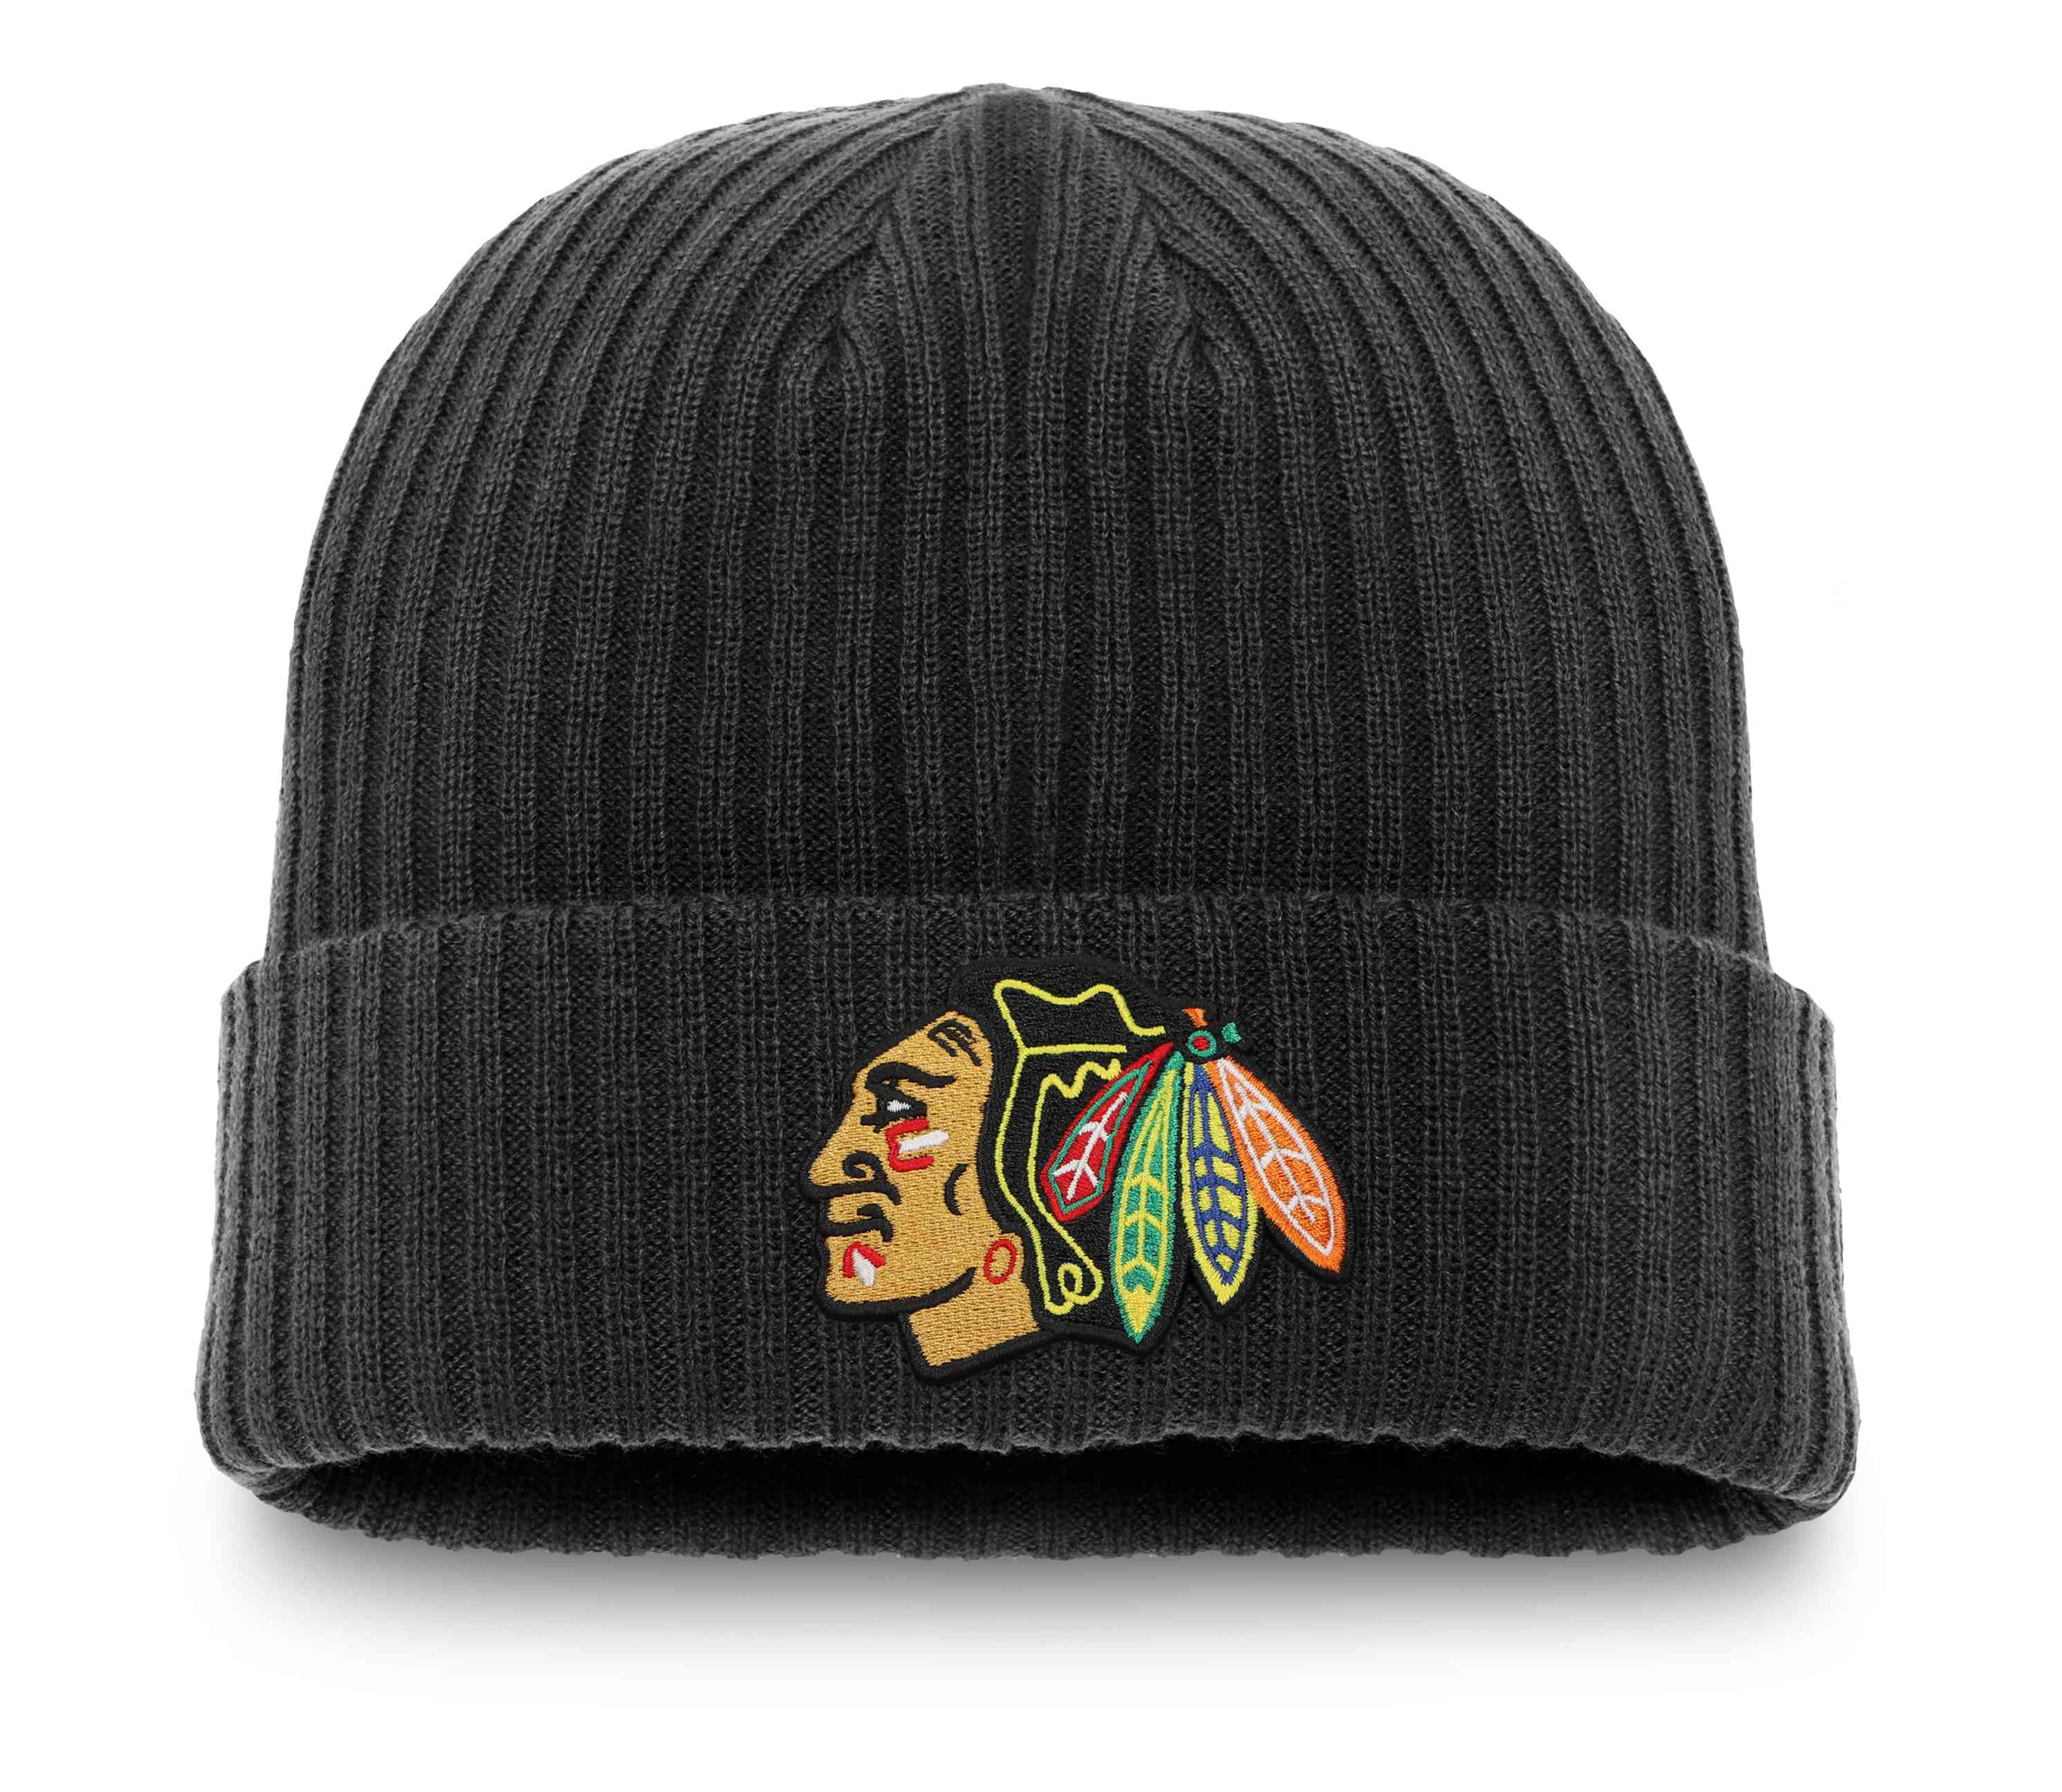 Fanatics - NHL Chicago Blackhawks Core Cuffed Knit Beanie